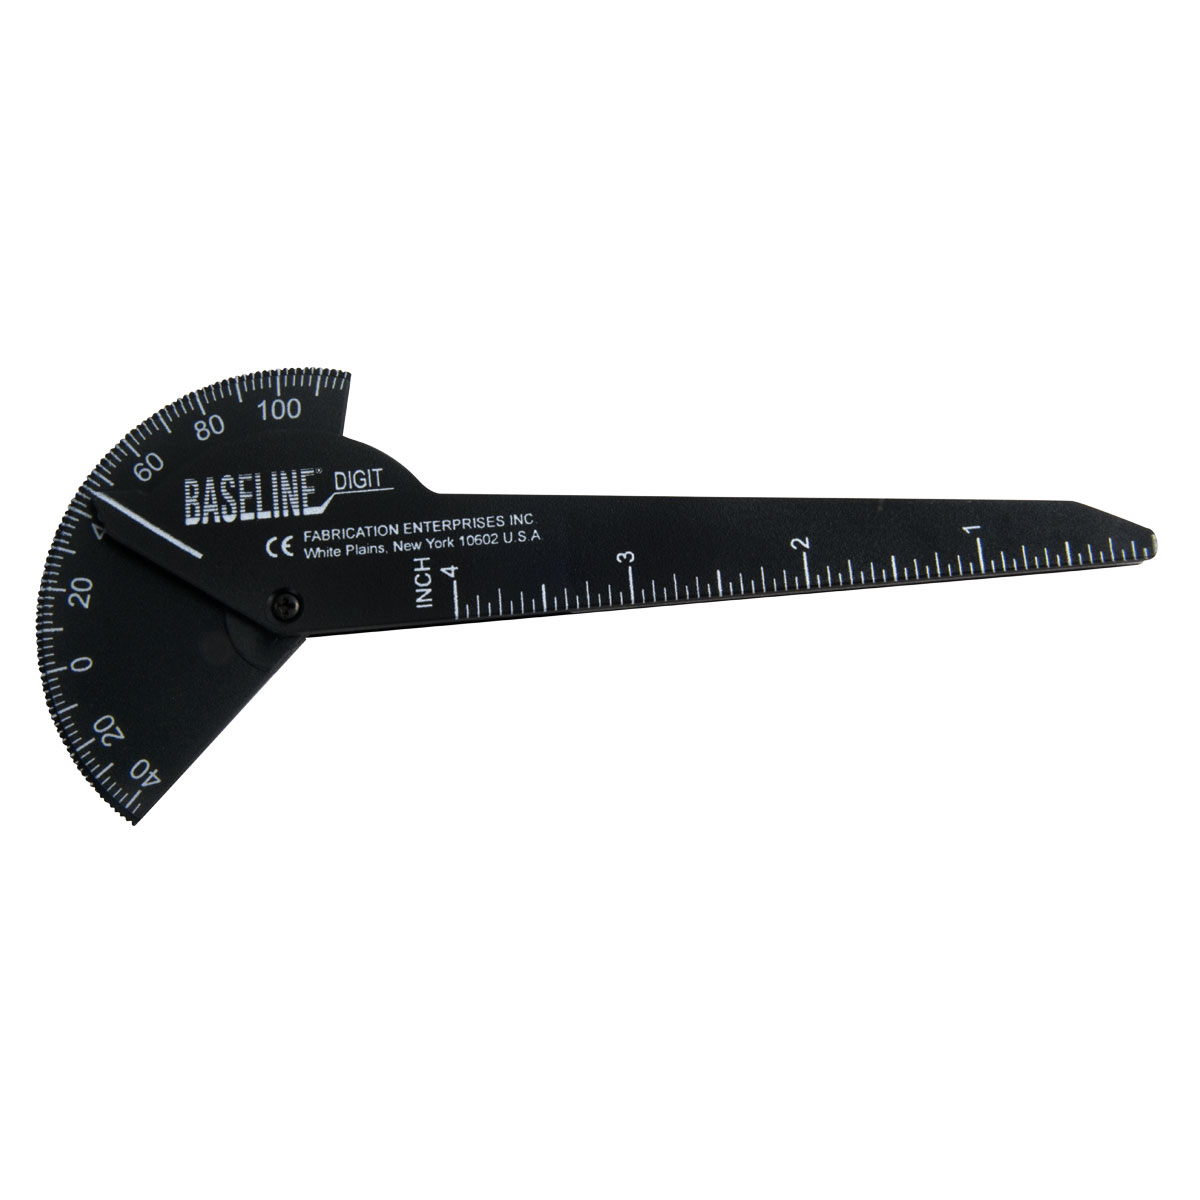 Baseline Plastic Finger Goniometer 1009083 W54297 Baseline 12-1014  Plastic Goniometers Stainless Steel Goniometer Inclinometers  Goniometer